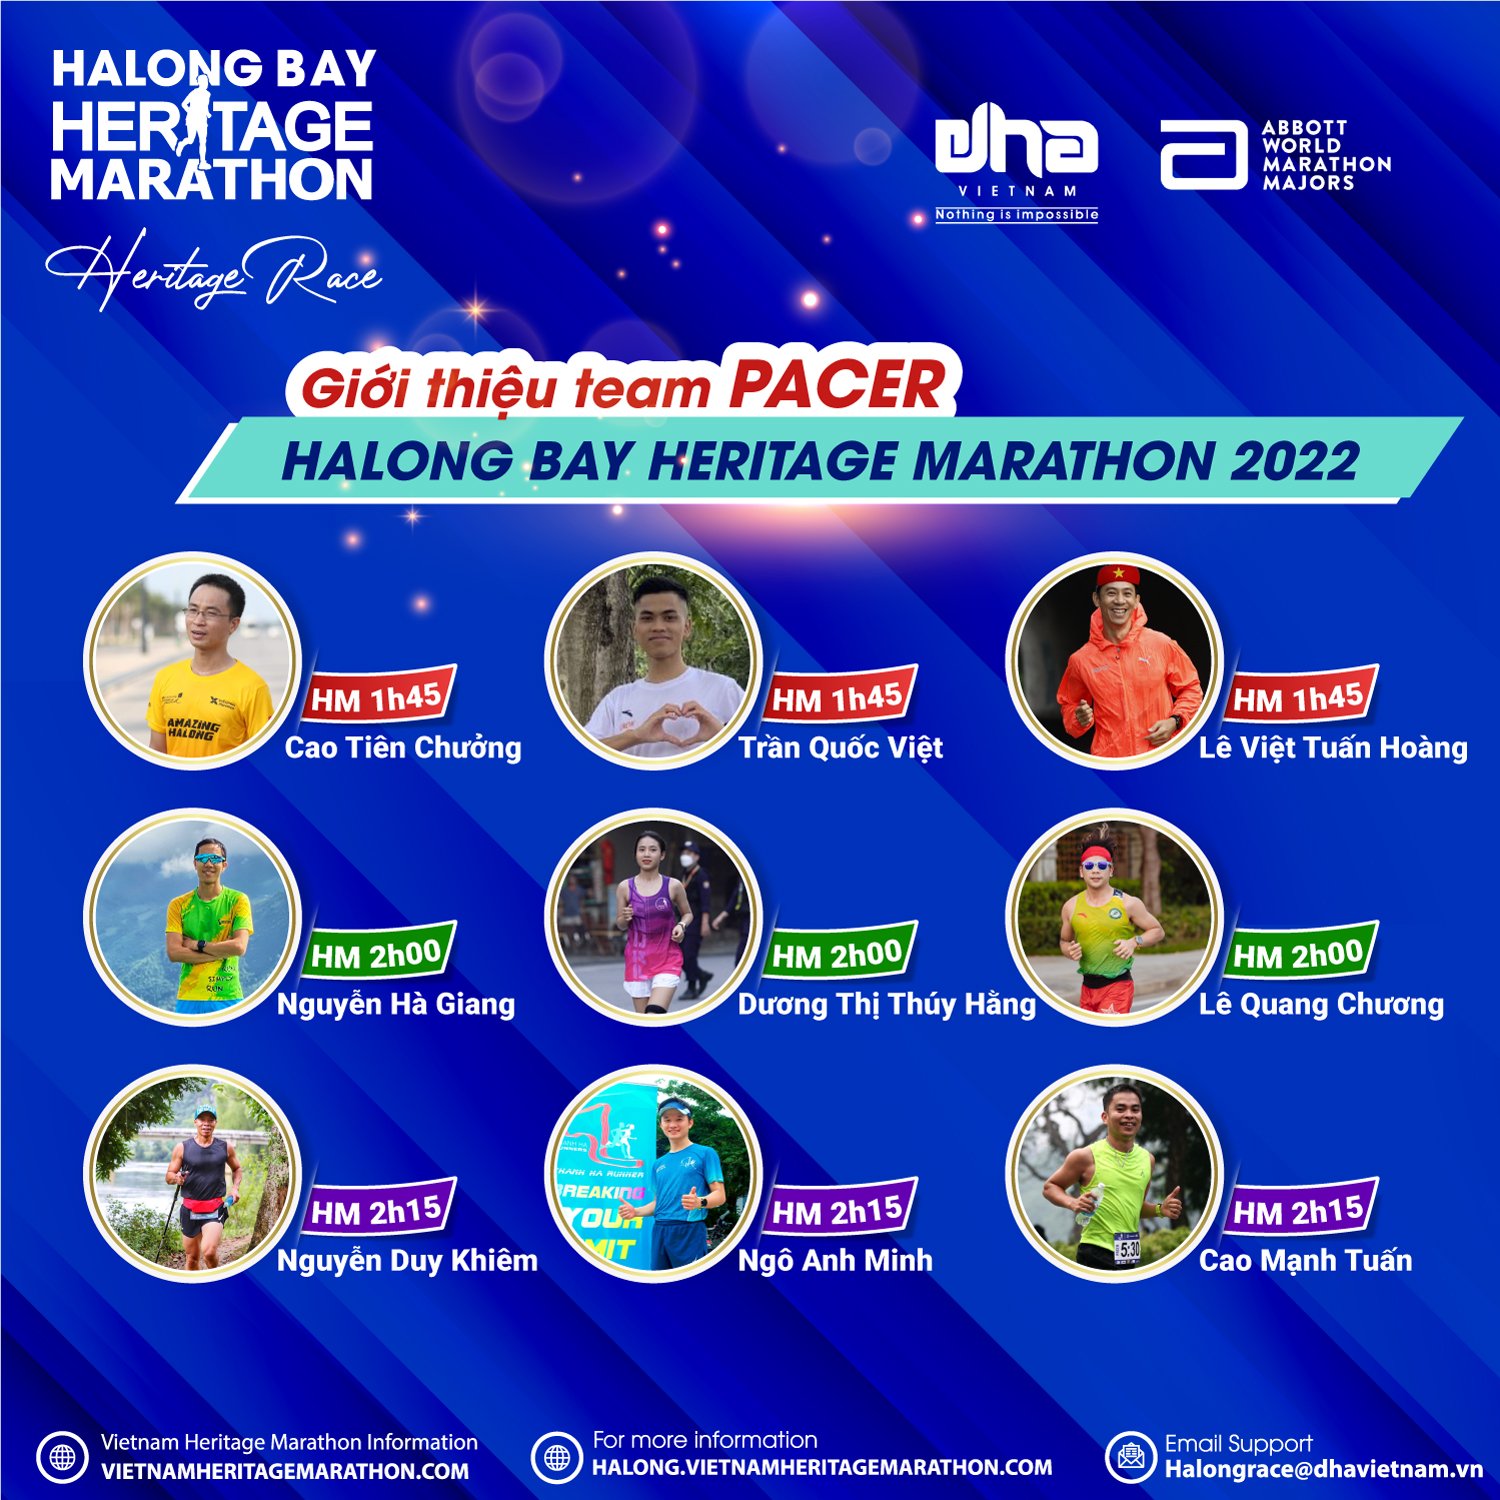 Halong Bay Heritage Marathon 2022's Pacer Team